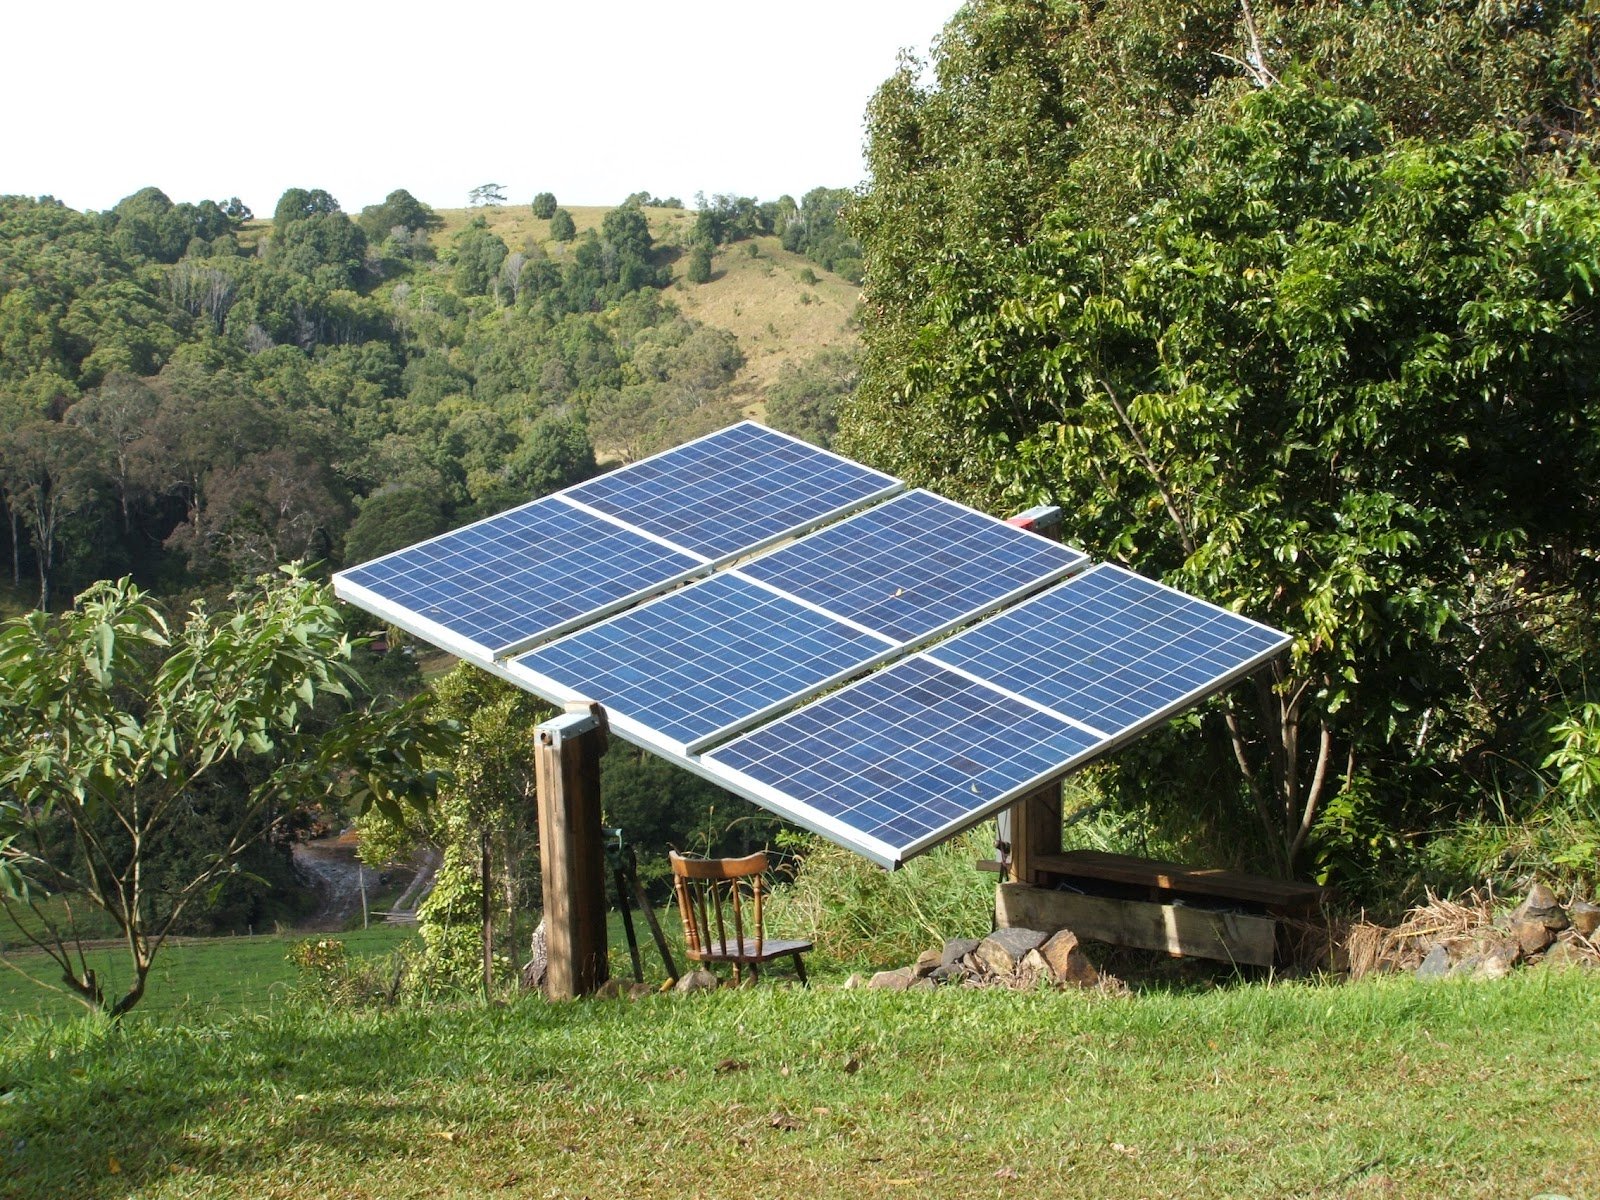 piggabeen valley aquaponics off grid solar panel system diy